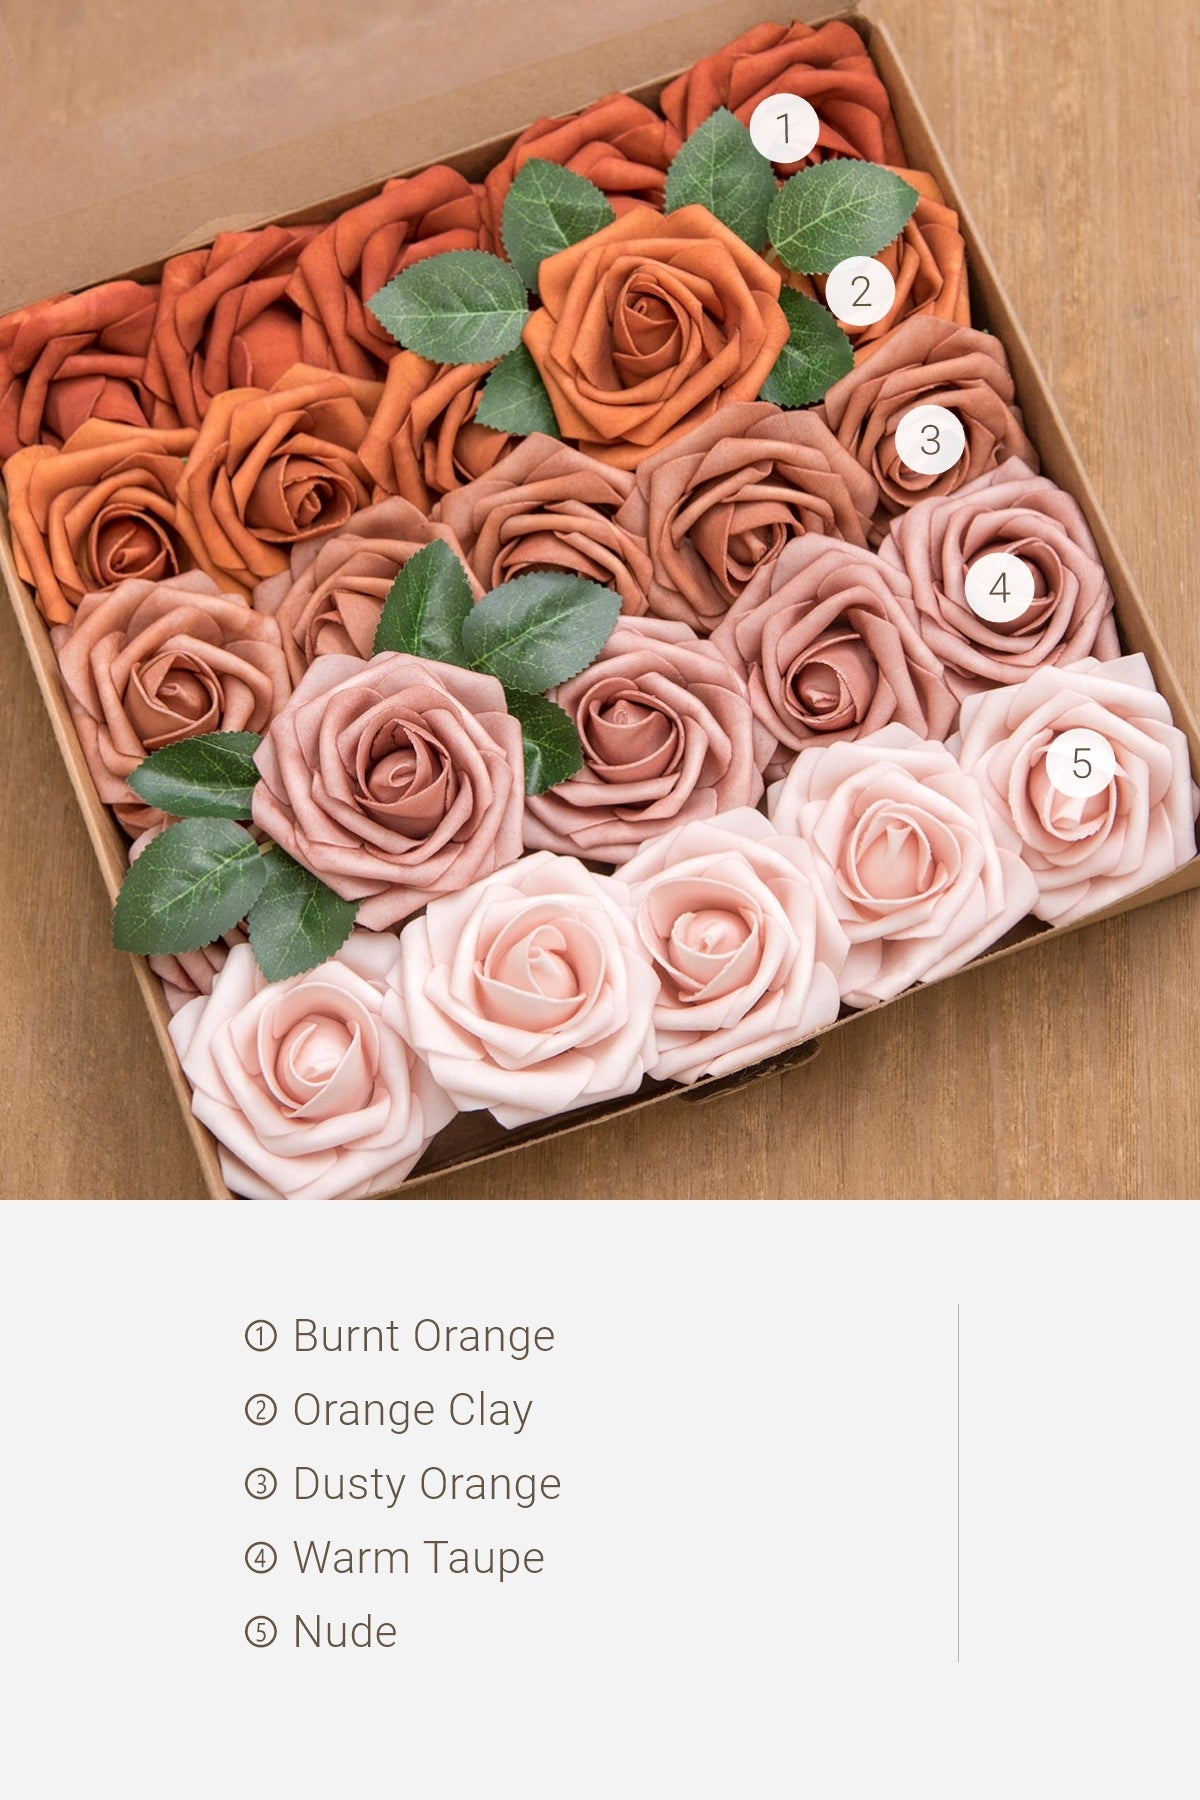 3" Foam Rose with Stem - 59 Colors